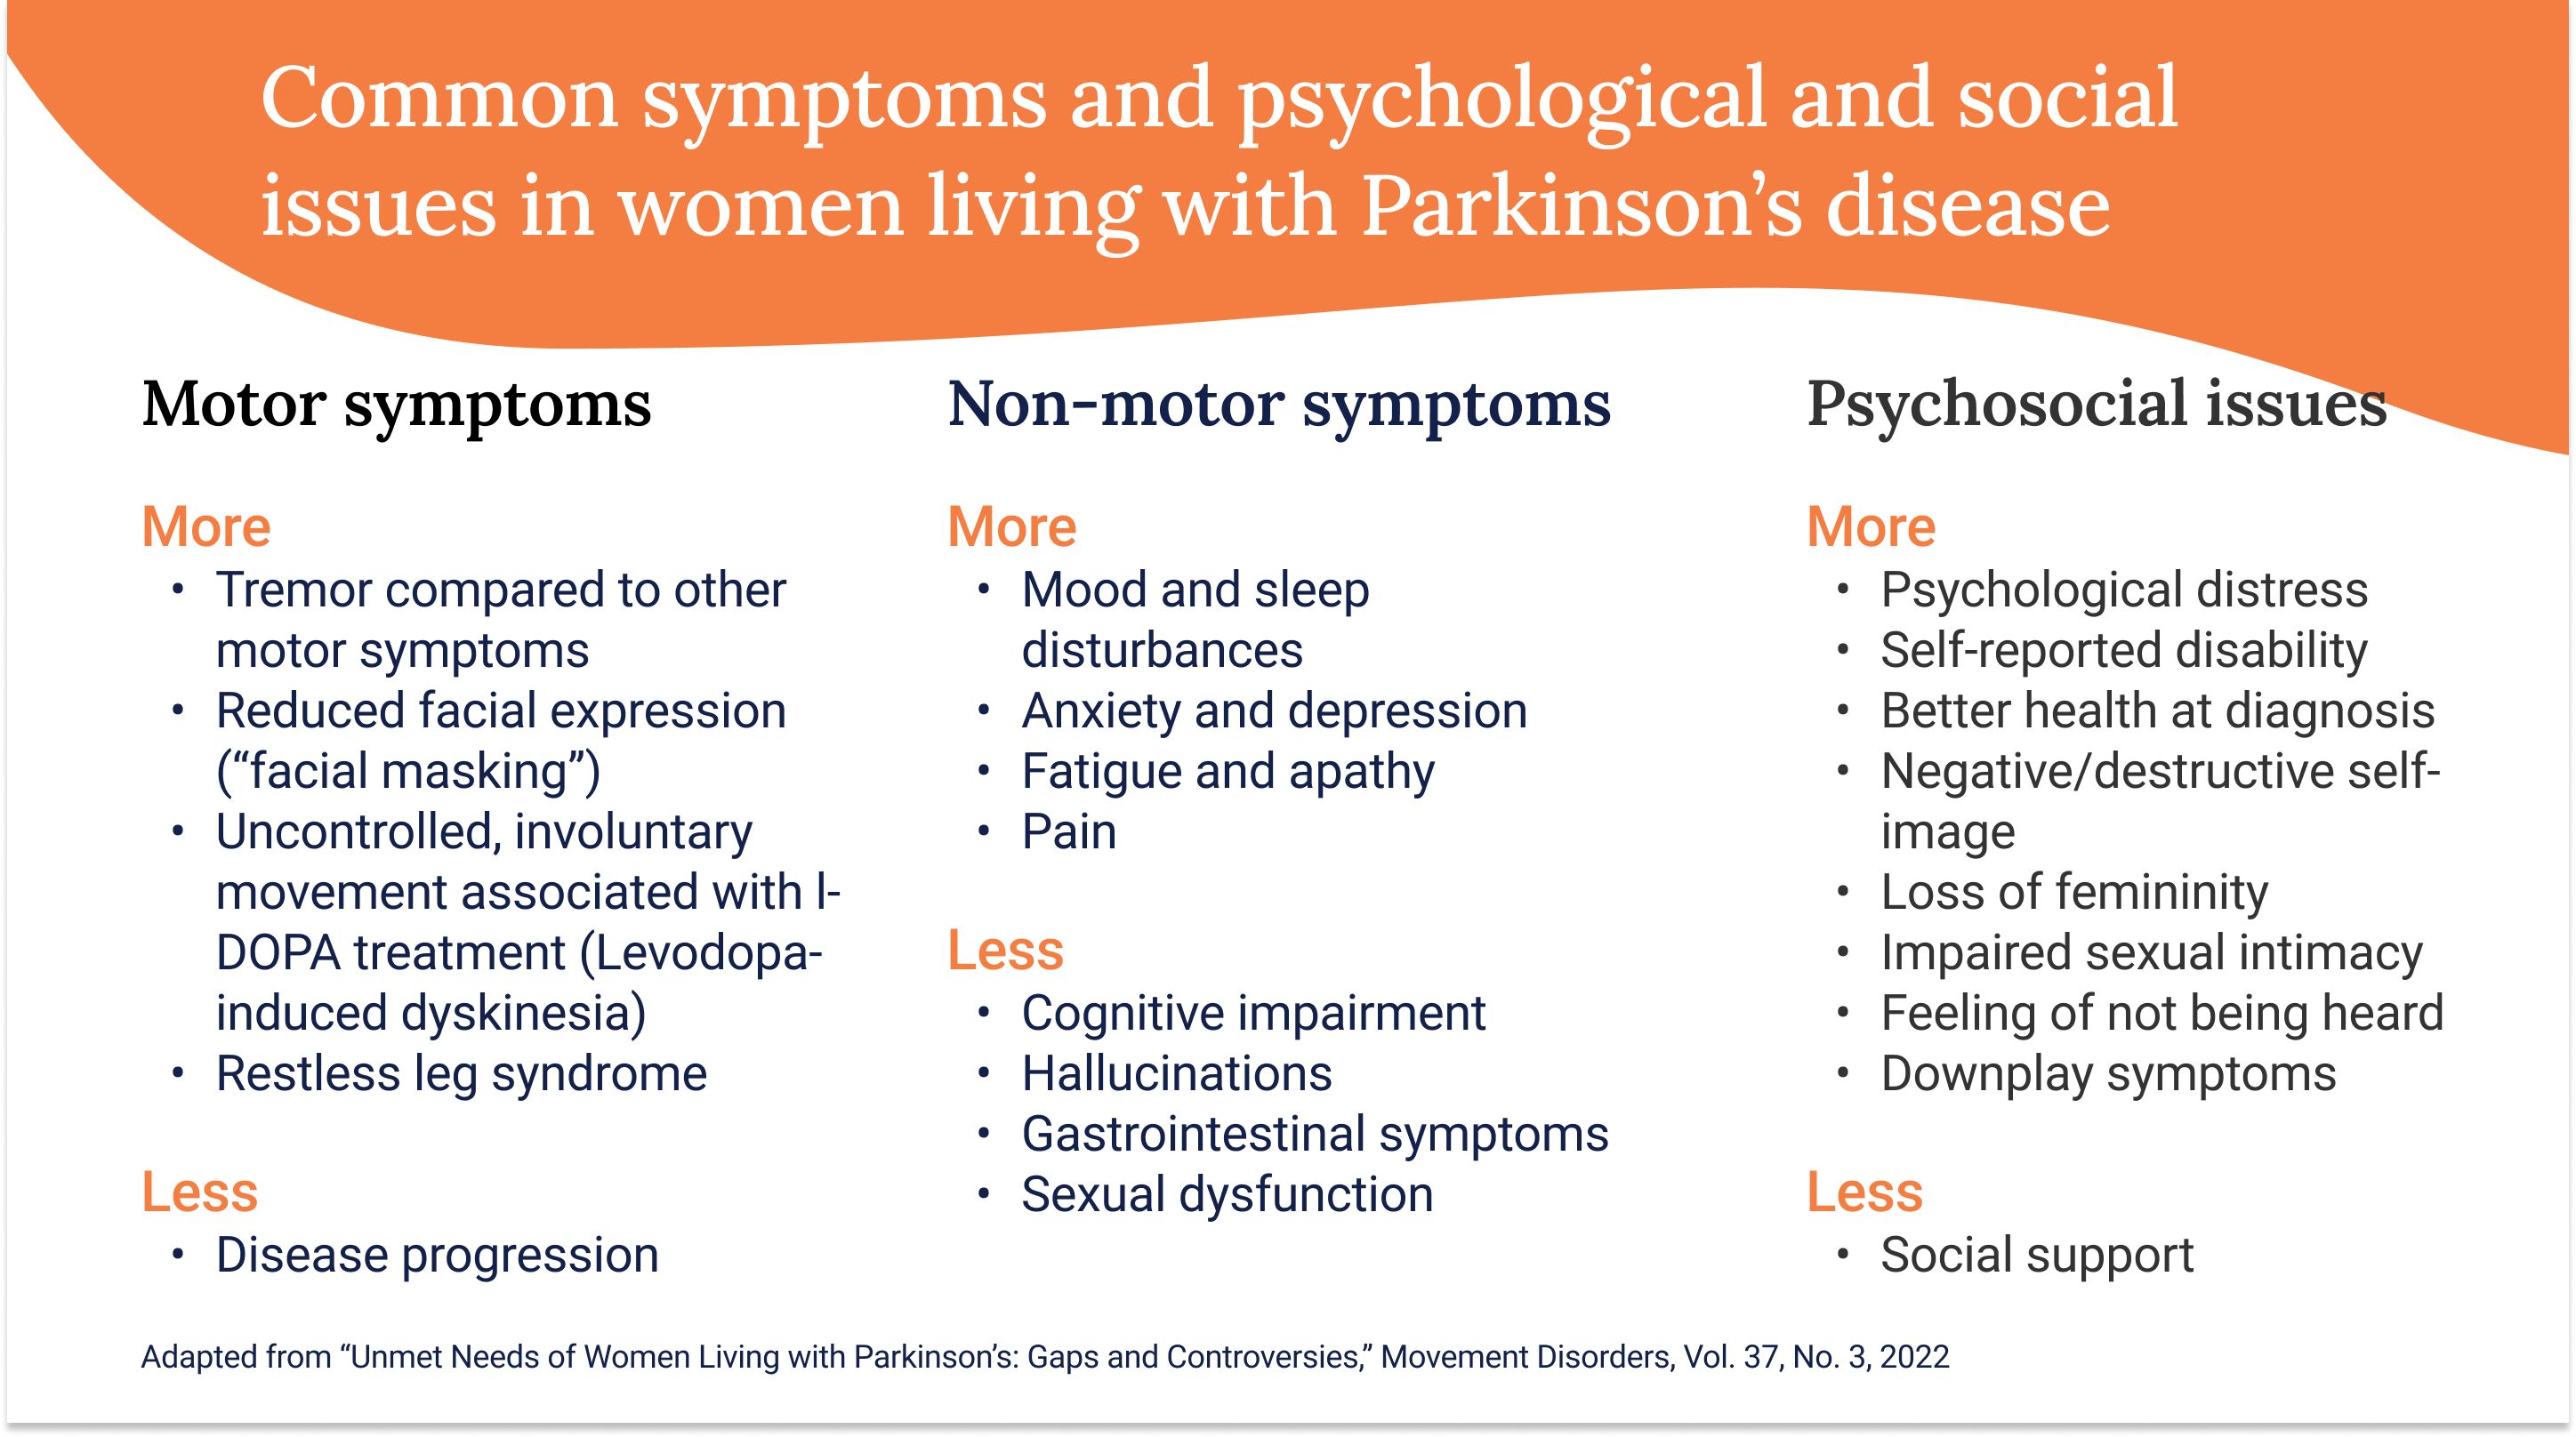 Symptoms of women living with Parkinson's disease